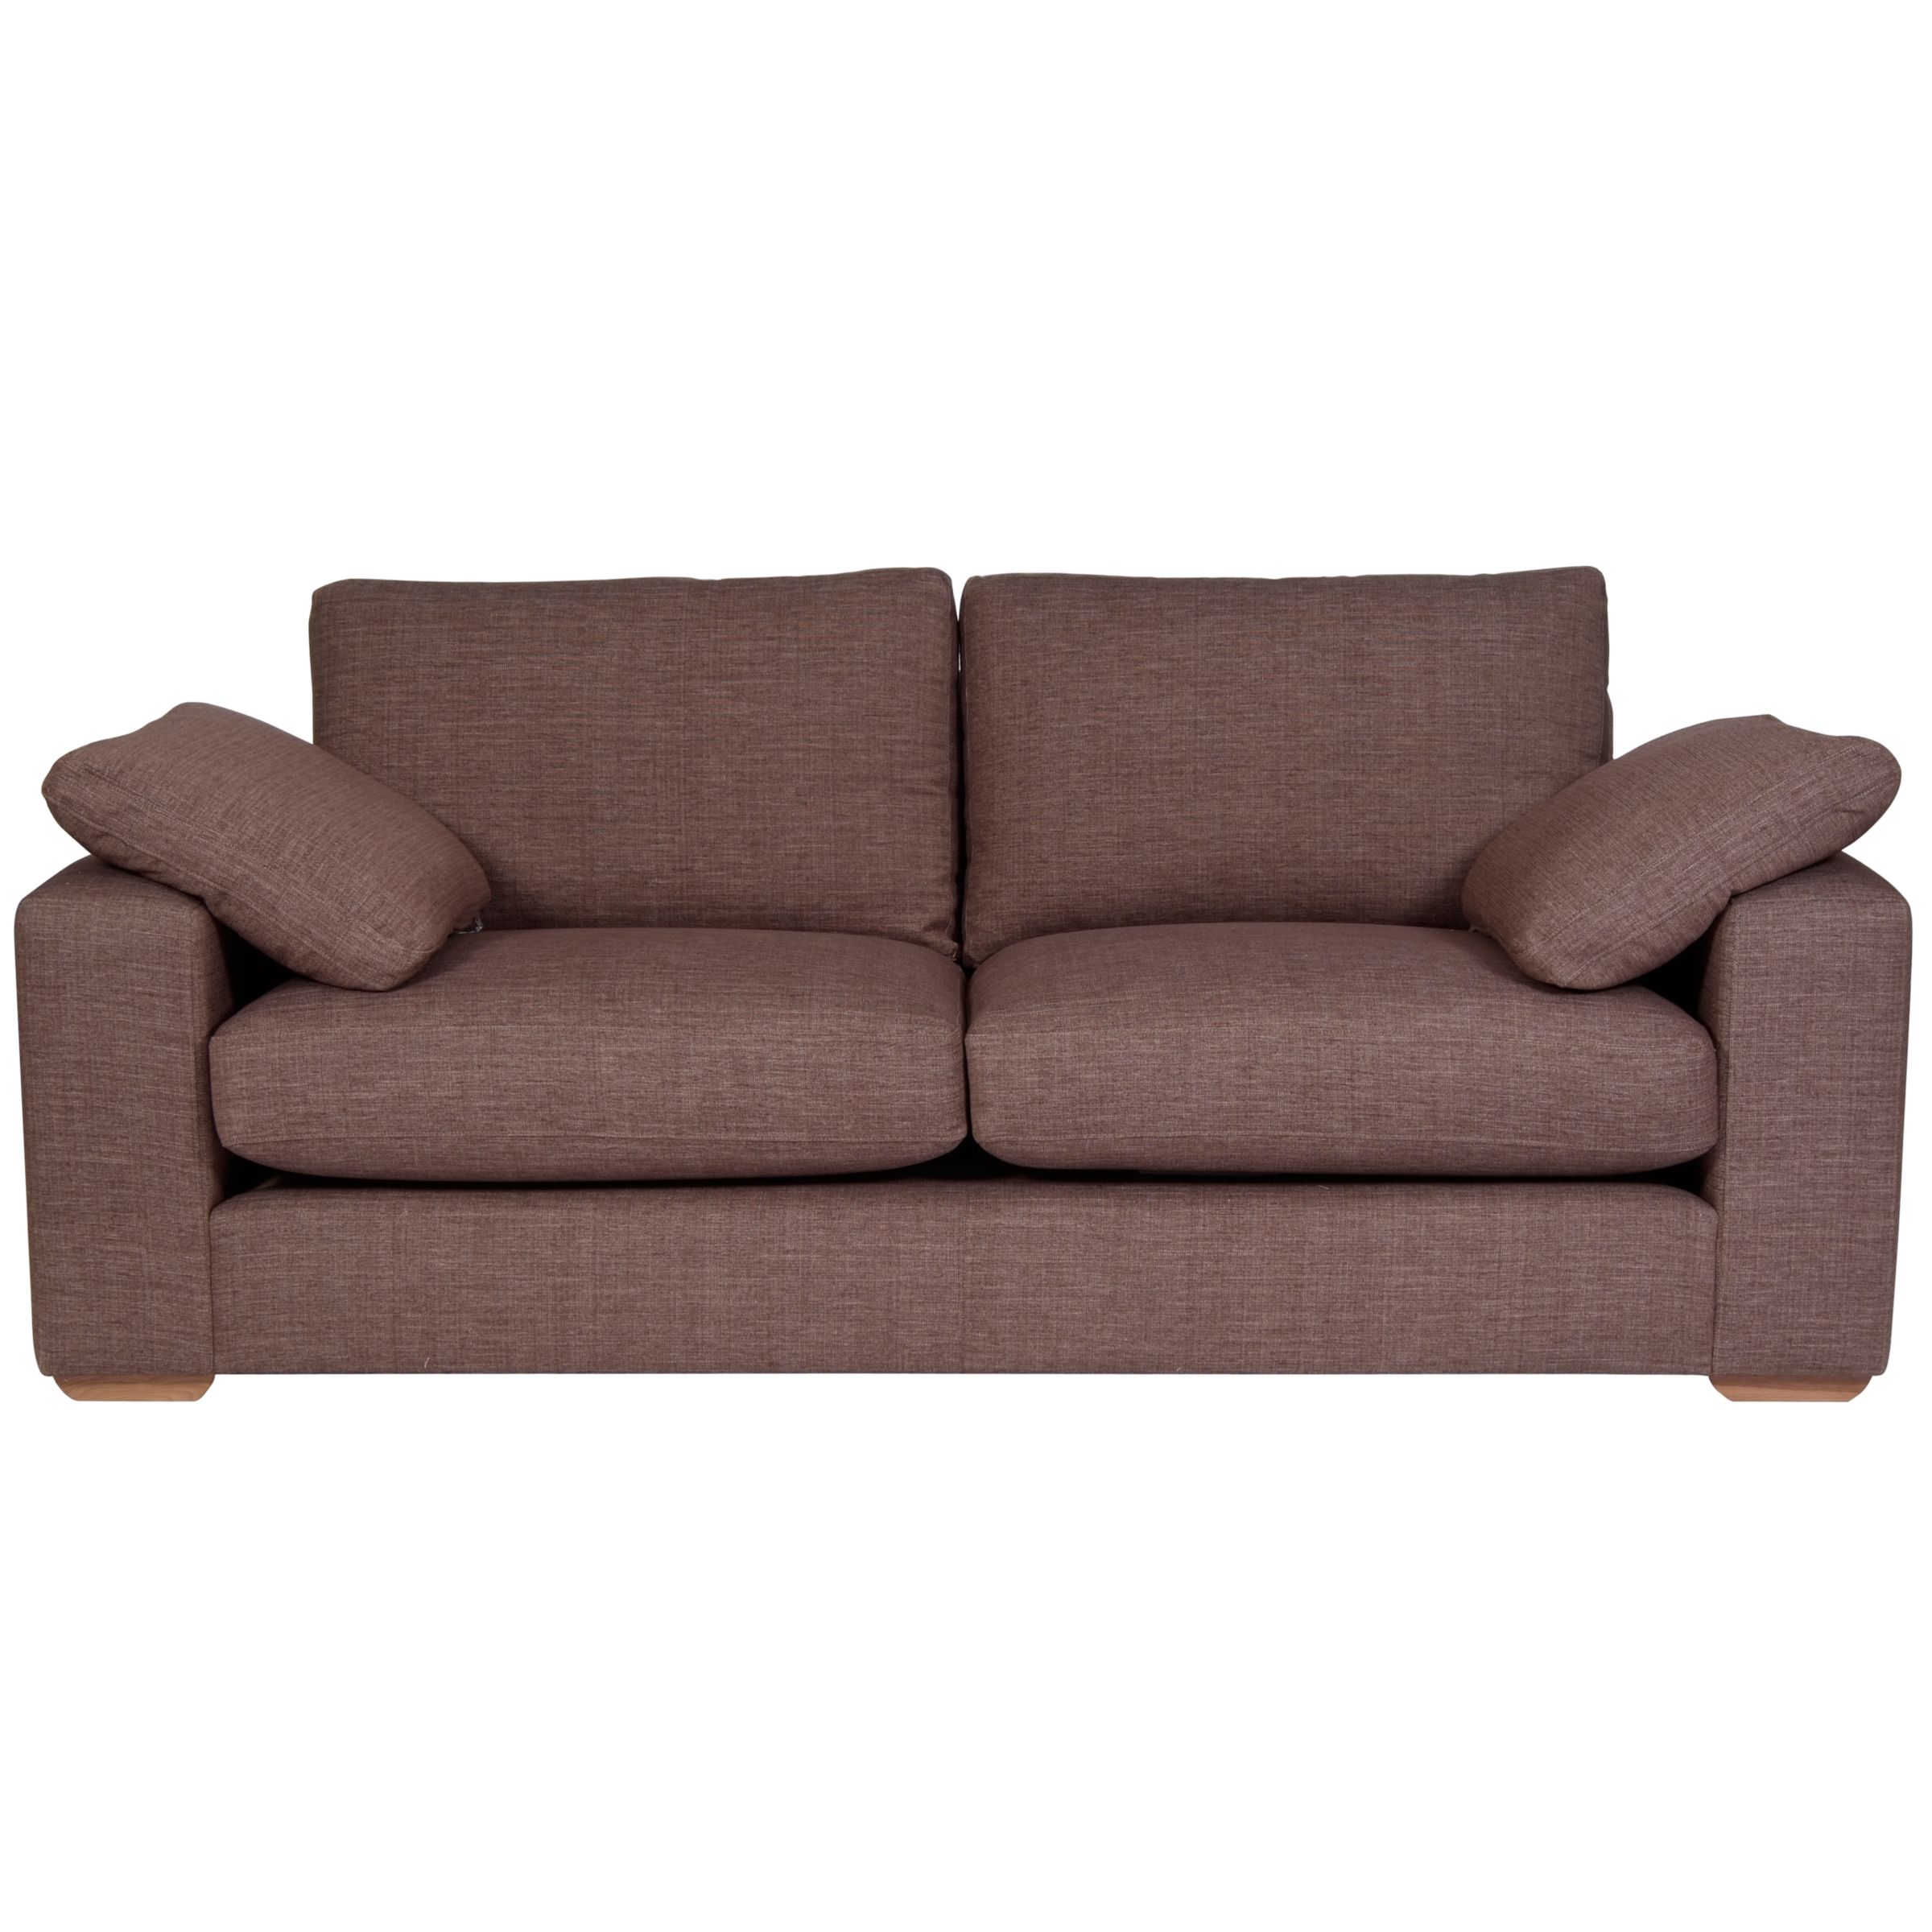 John Lewis Options Large Sofa, Model 11, Barnby Steel at John Lewis